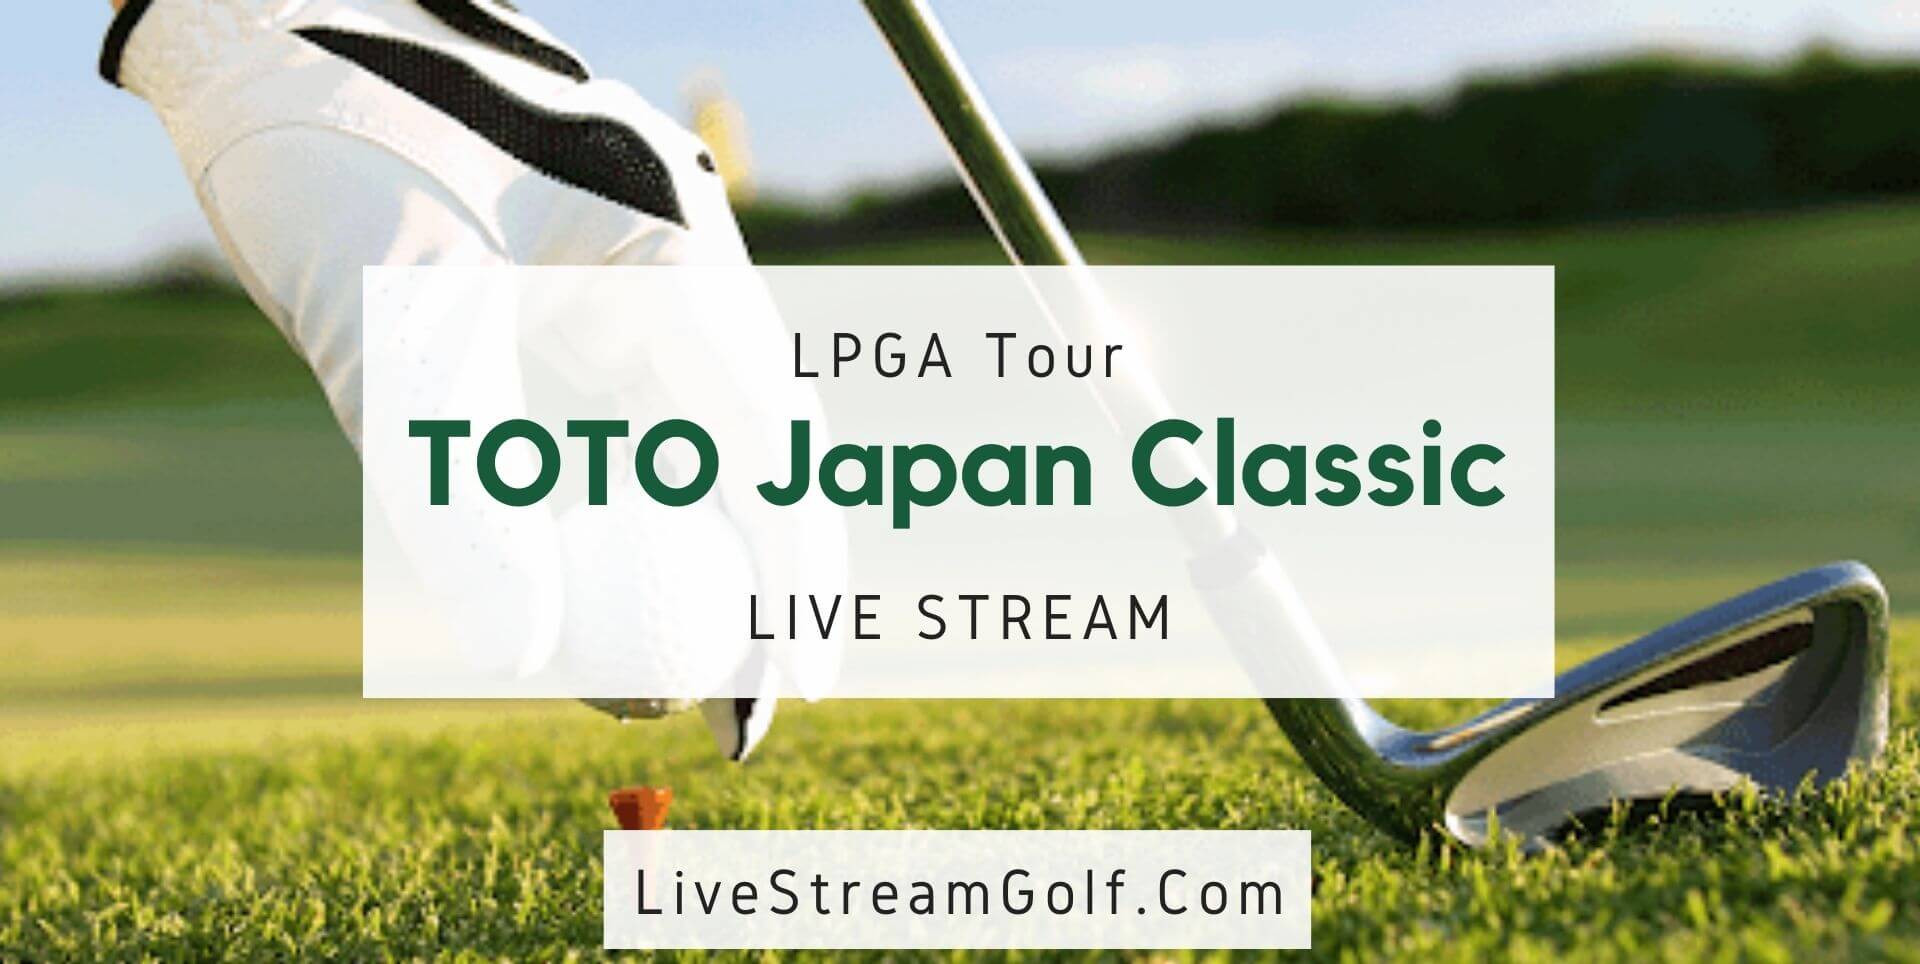 TOTO Japan Classic Day 4 Live Stream: LPGA Tour 2022